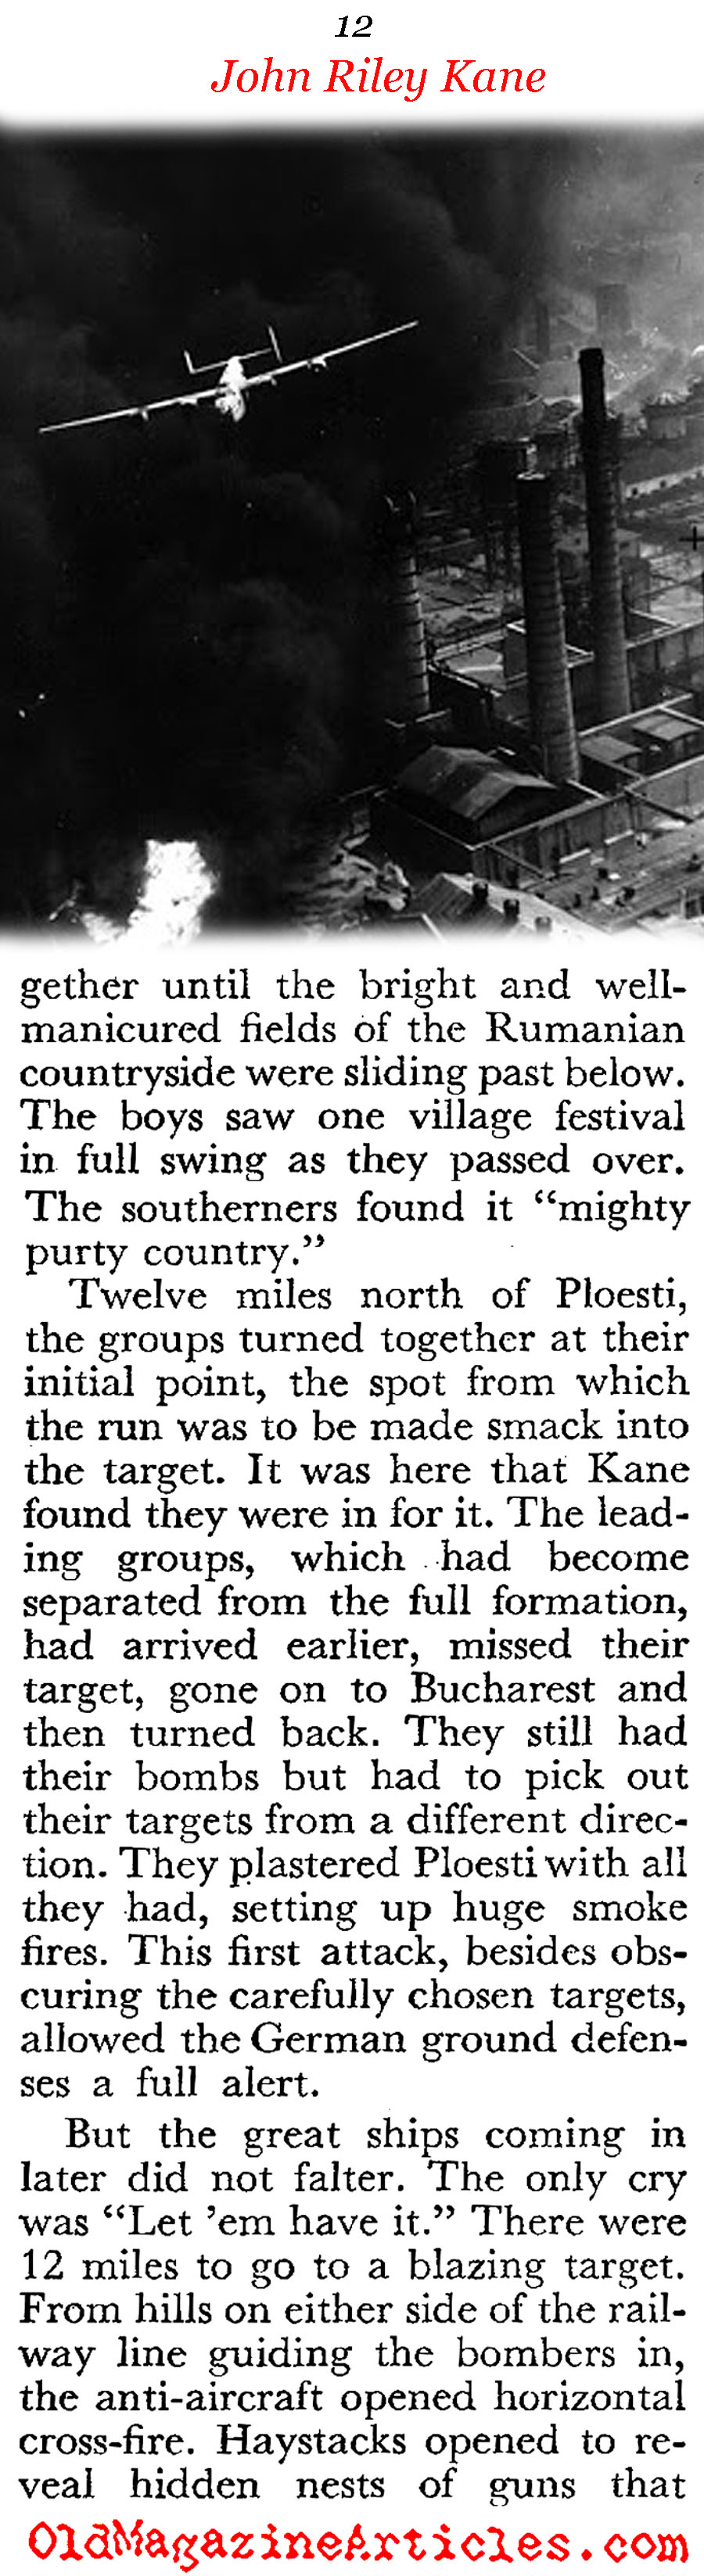 John Riley Kane (Coronet Magazine, 1944)